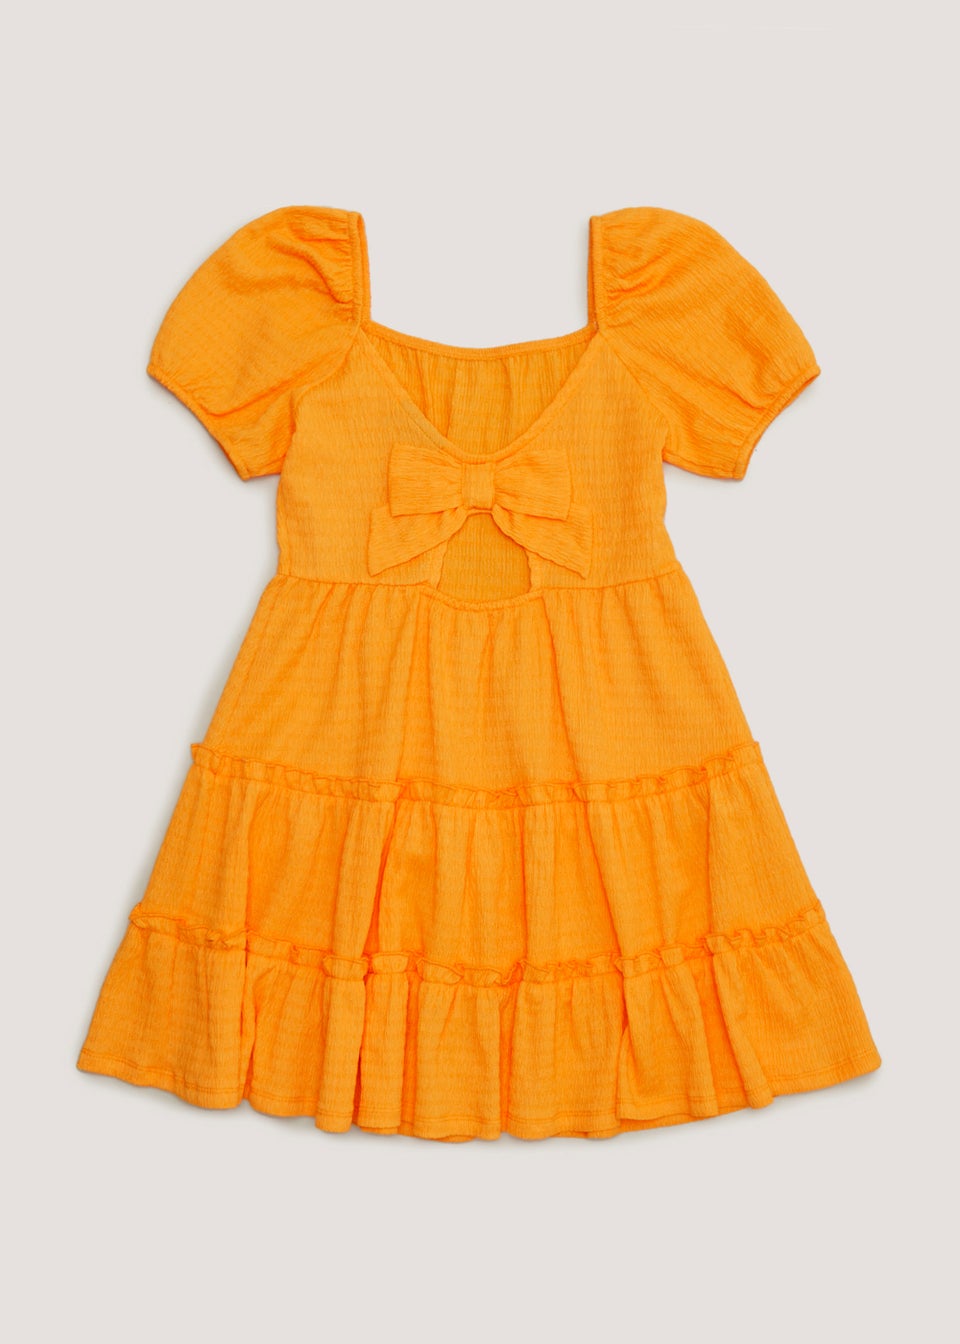 Cutecumber Girls Denim Solid Pinafore Orange Dress with Cotton Knit Inner.  CC5297D-ORANGE-42 : Amazon.in: Clothing & Accessories